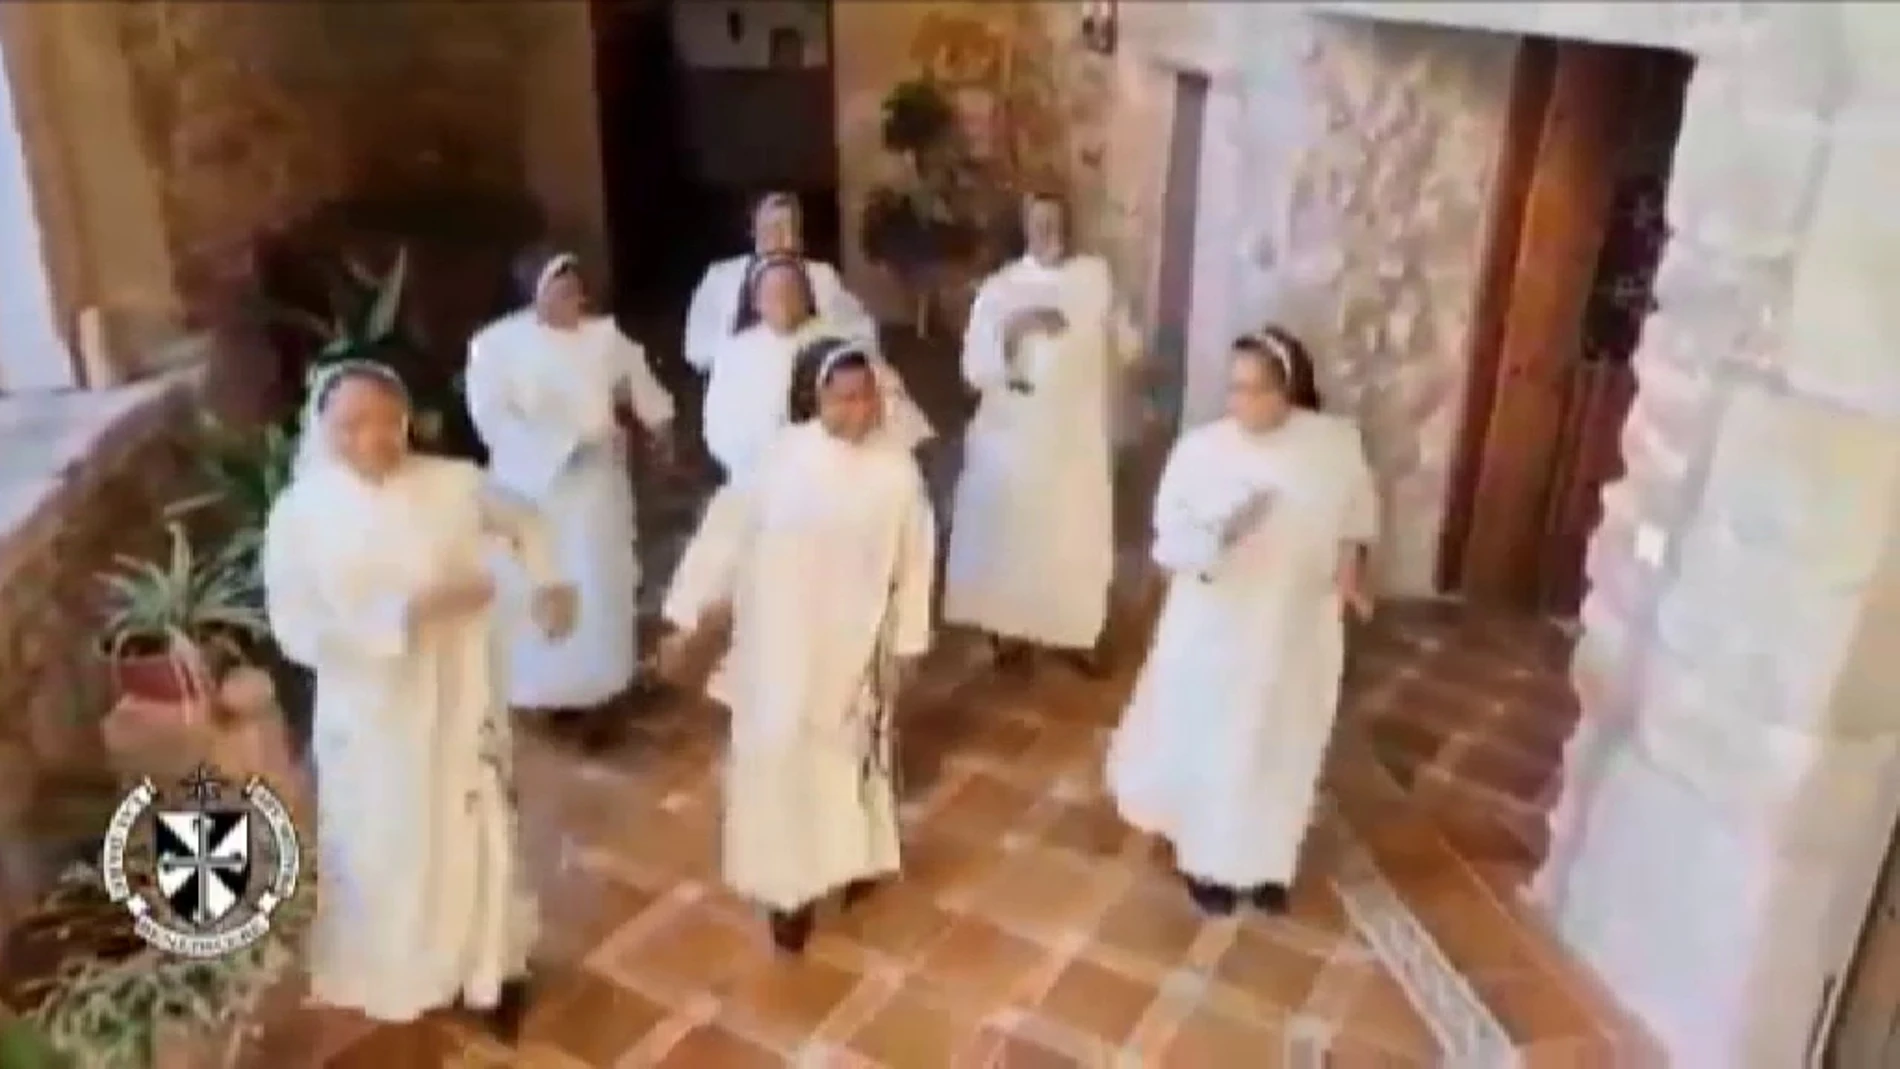 Monjas de clausura bailan para animar al mundo desde Trujillo, Cáceres